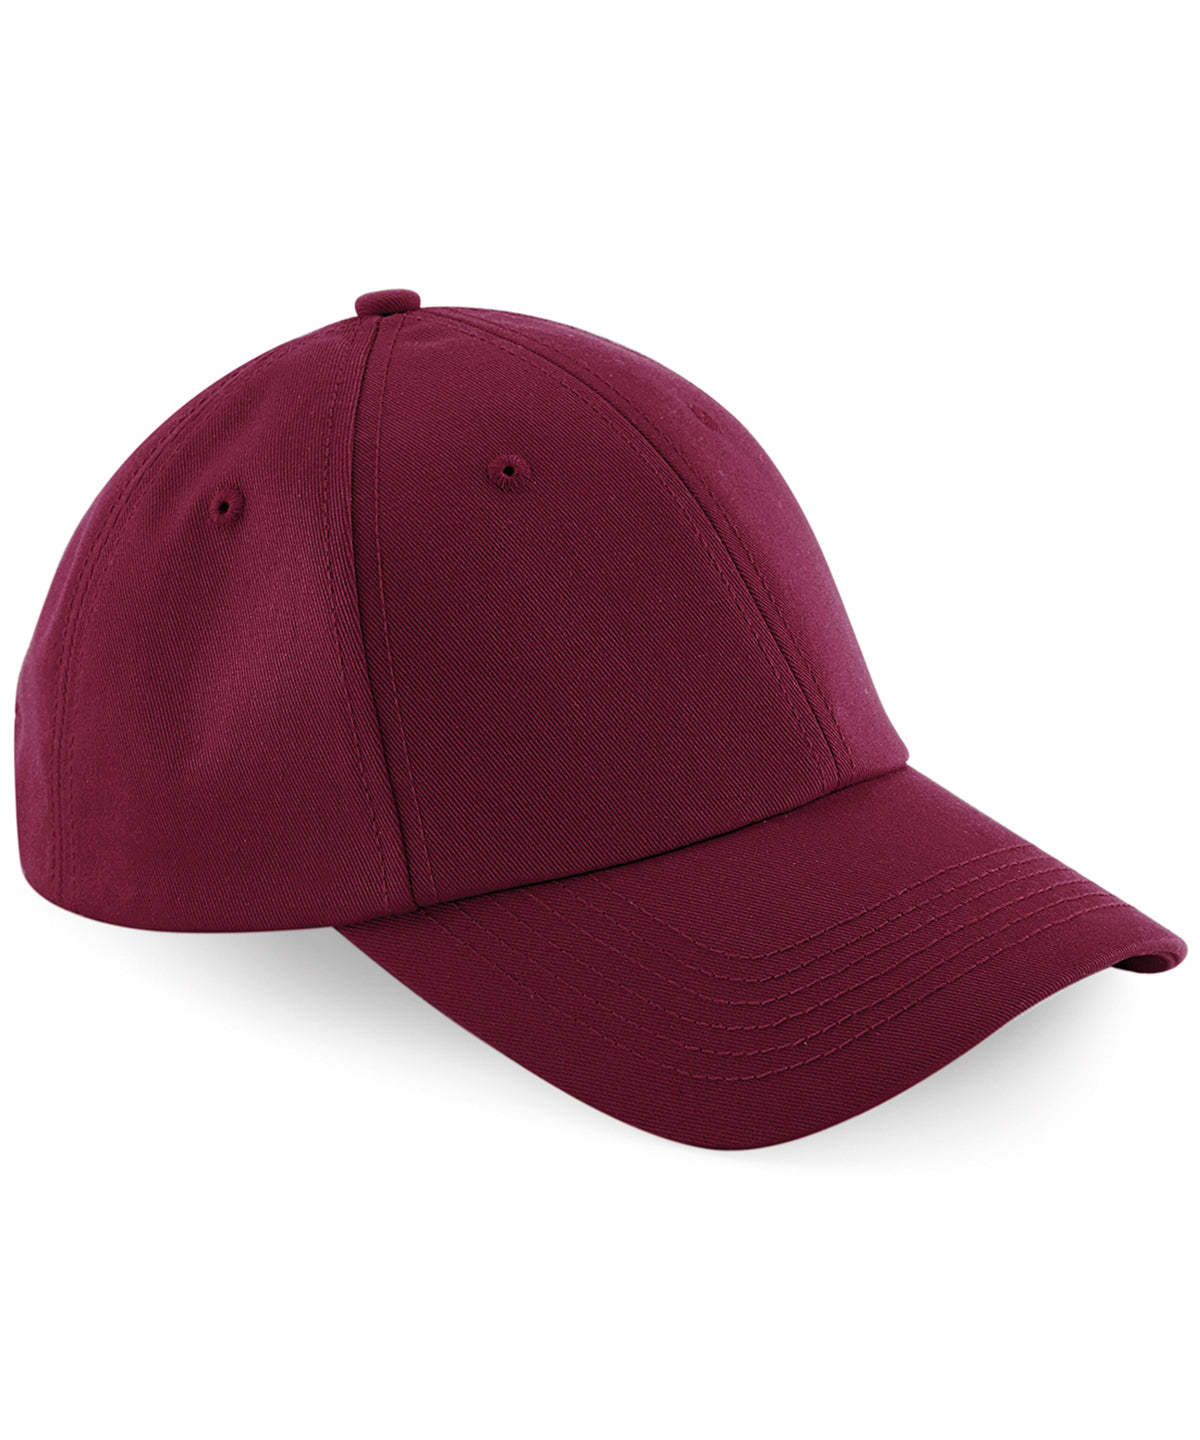 Personalised Caps - Burgundy Beechfield Authentic baseball cap